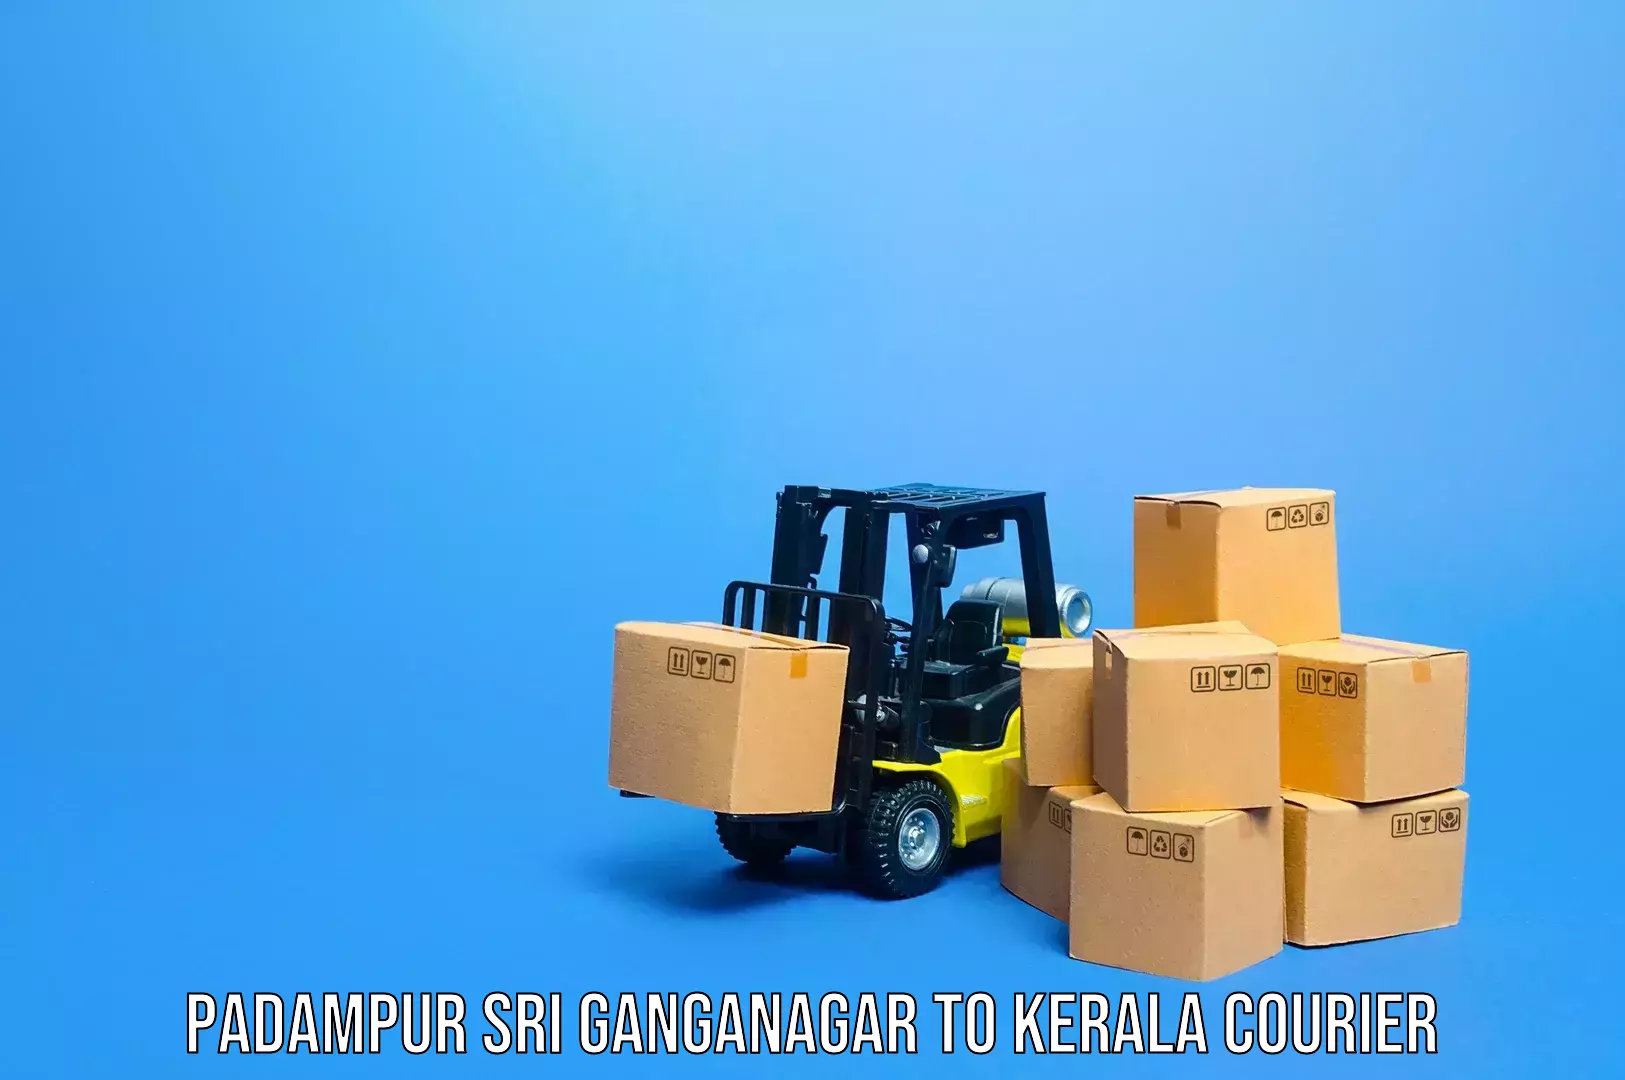 Luggage shipping specialists Padampur Sri Ganganagar to Kerala